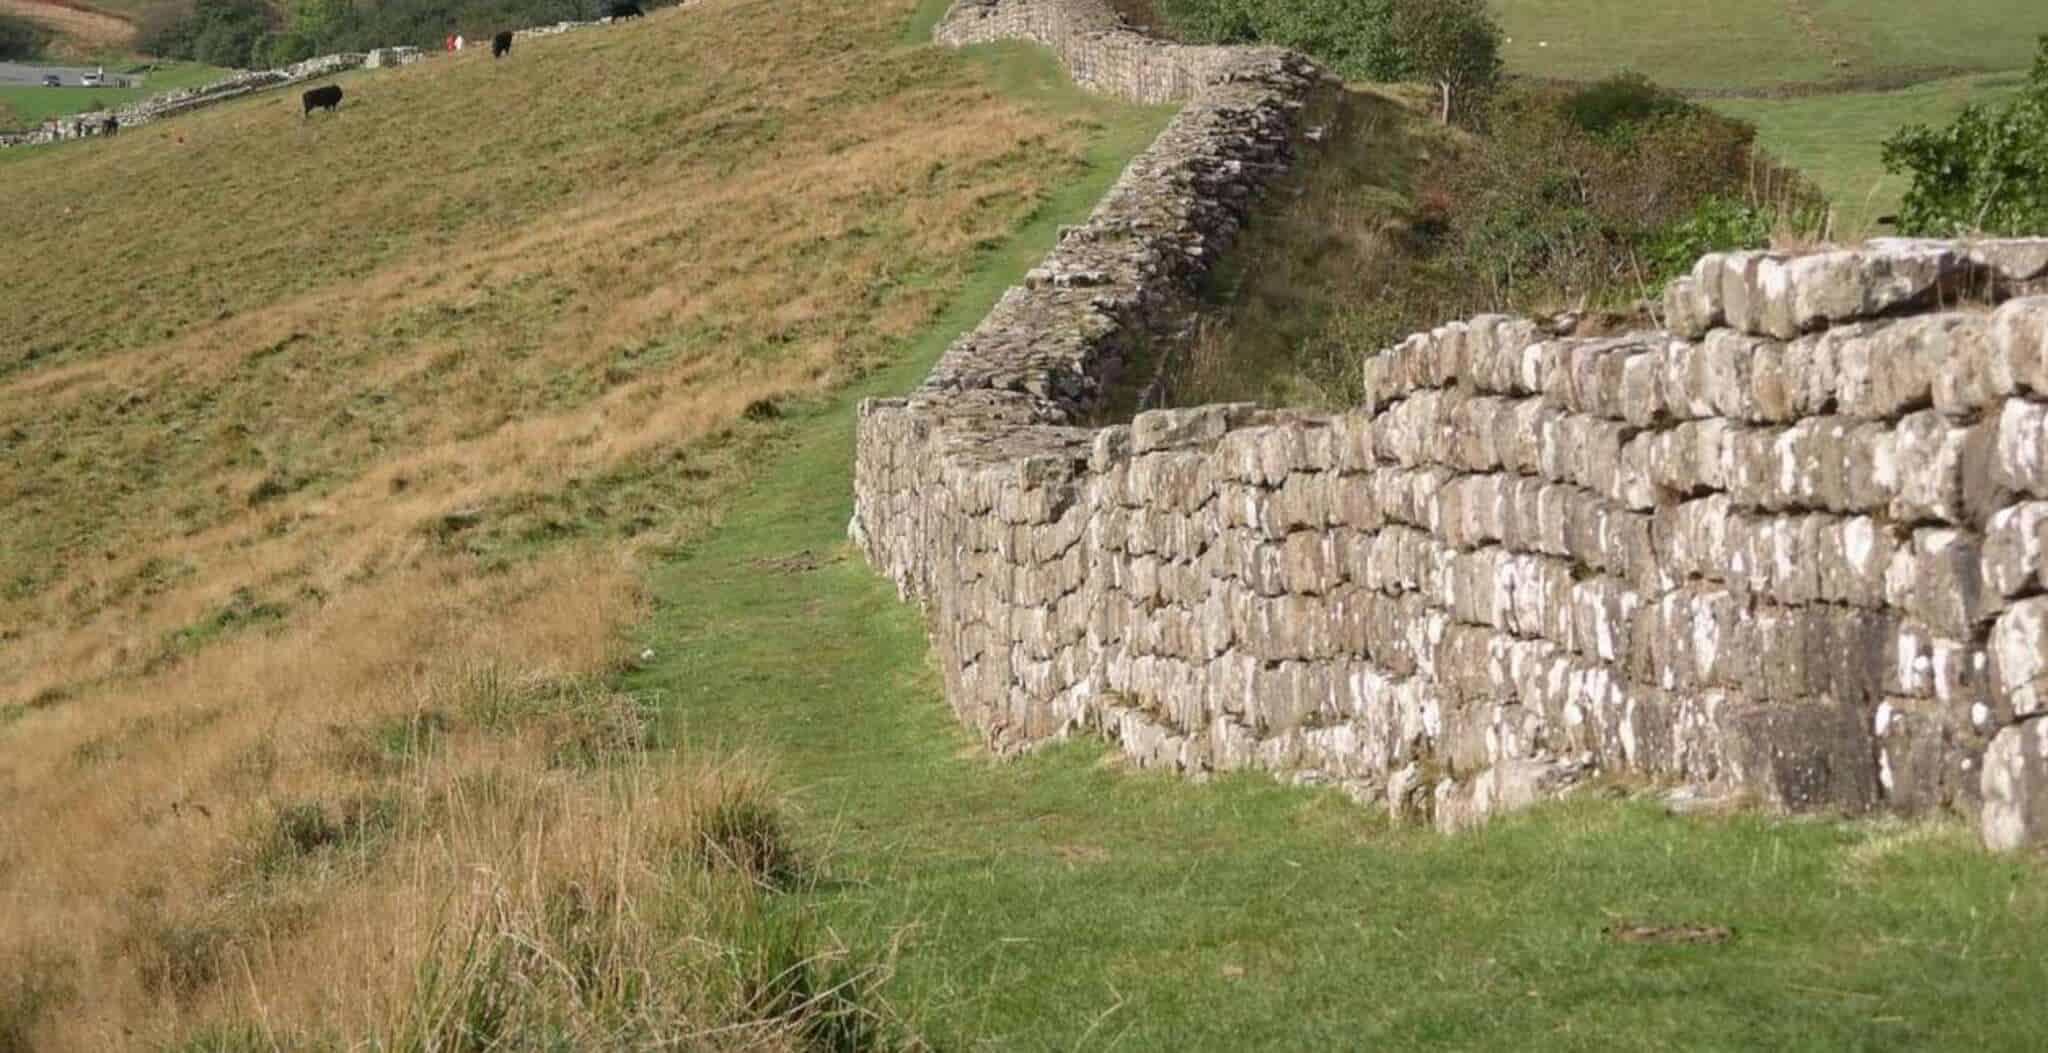 https://www.historic-uk.com/wp-content/uploads/2017/06/hadrians-wall-bridge-adutment-at-chester-fort.jpg